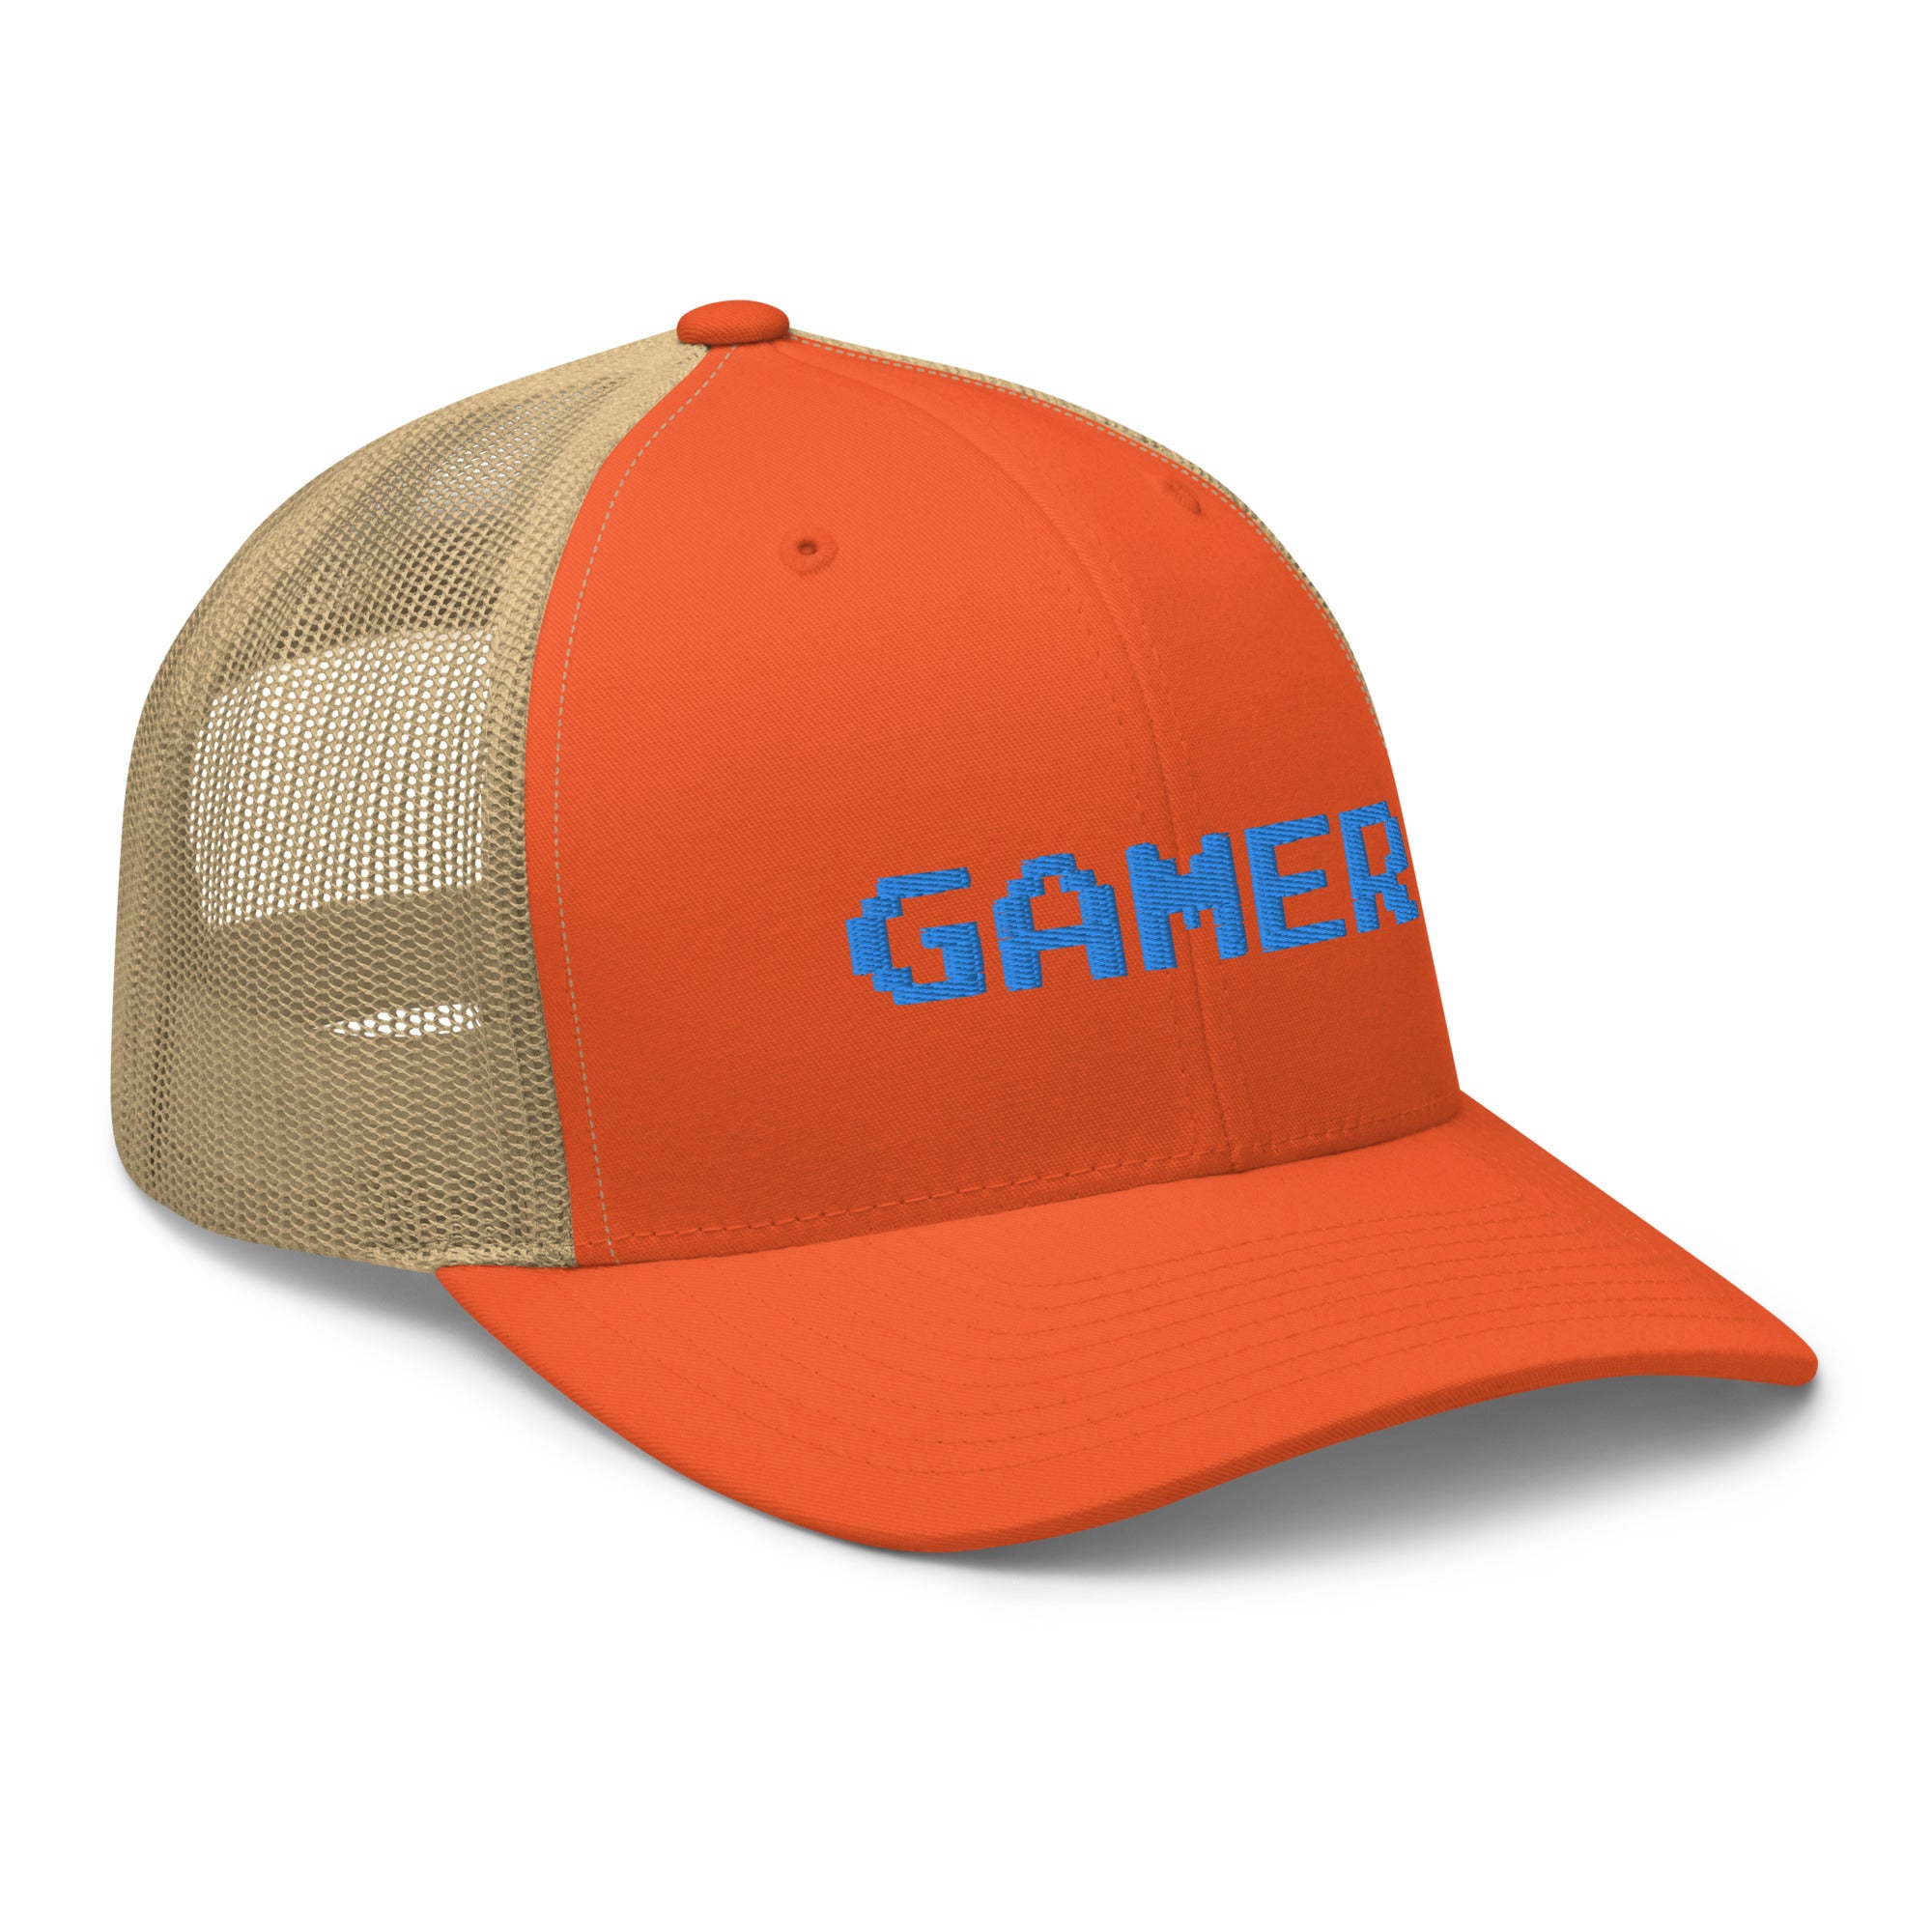 8 Bit Gamer Embroidered Retro Trucker Cap Snapback Hat